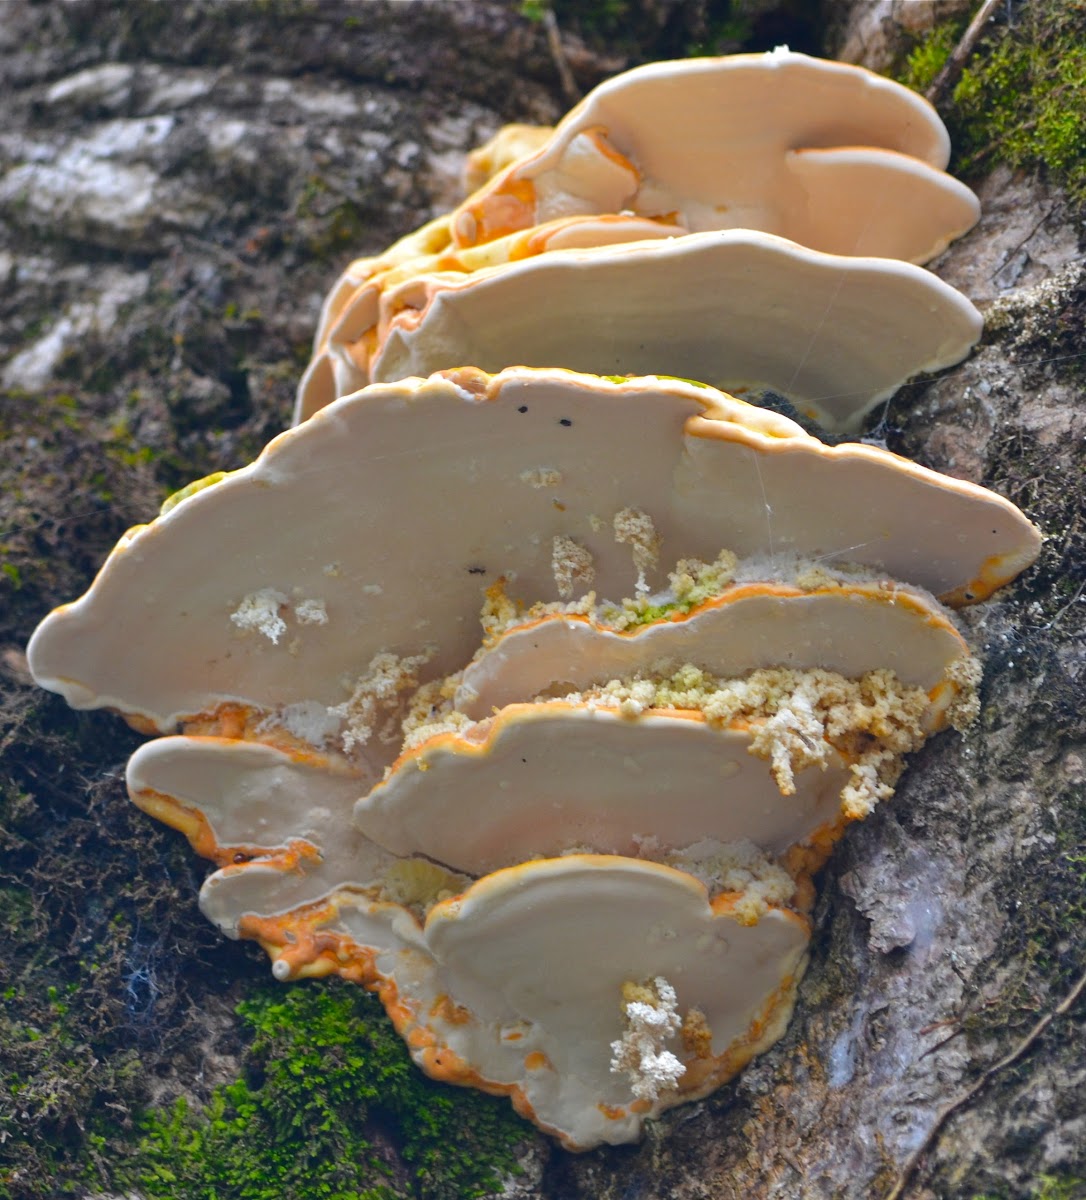 Fungi/Polyporus